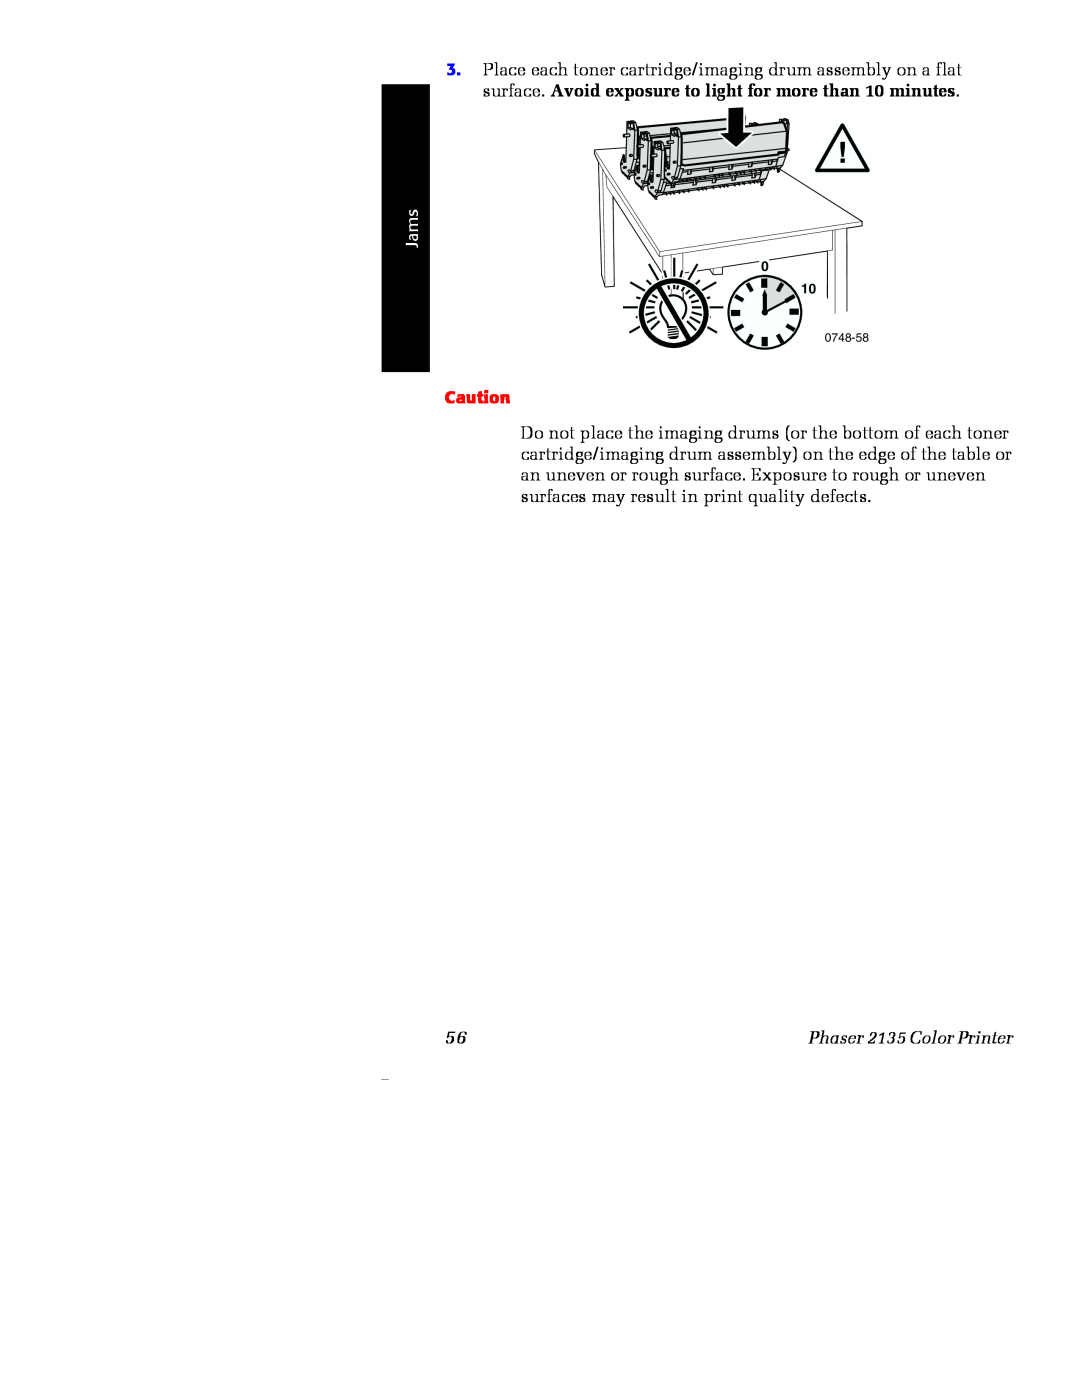 Xerox manual Jams, Phaser 2135 Color Printer 